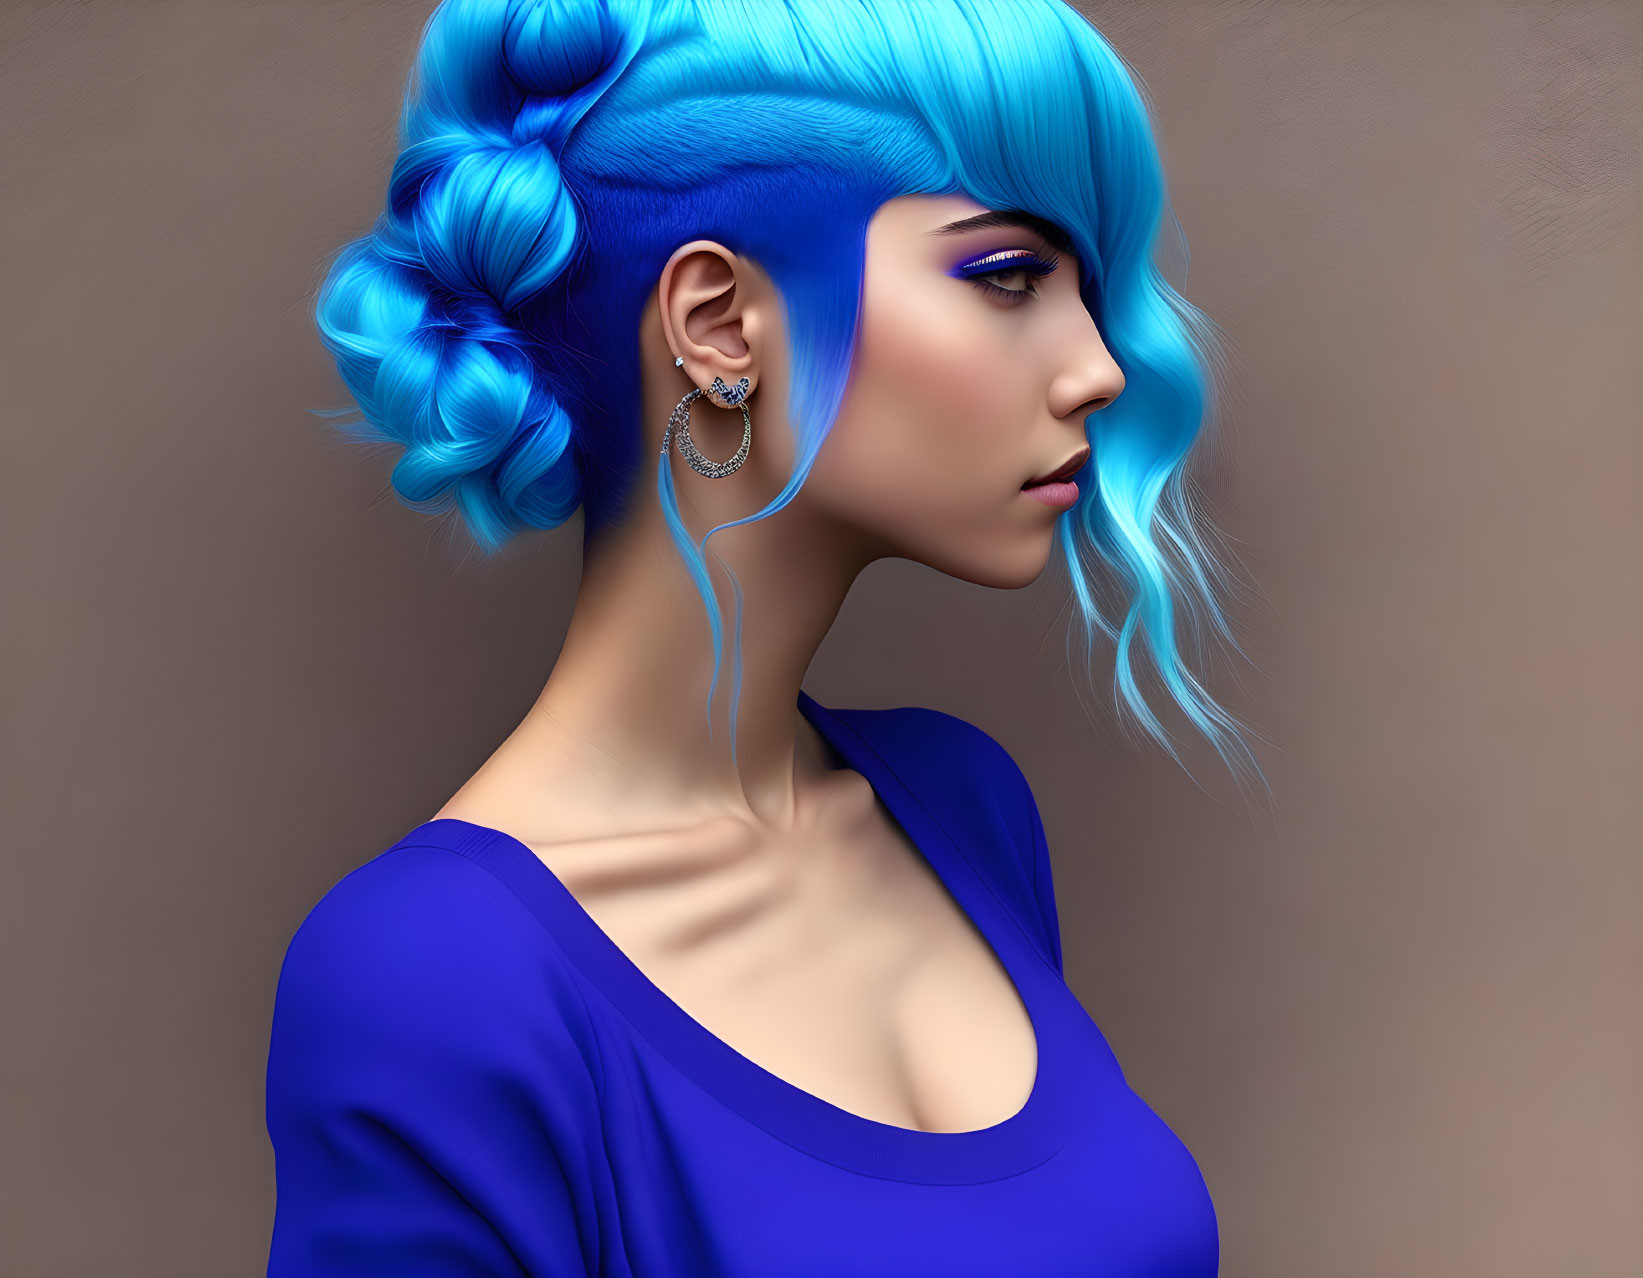  A very cute girl with fantastic blue hair